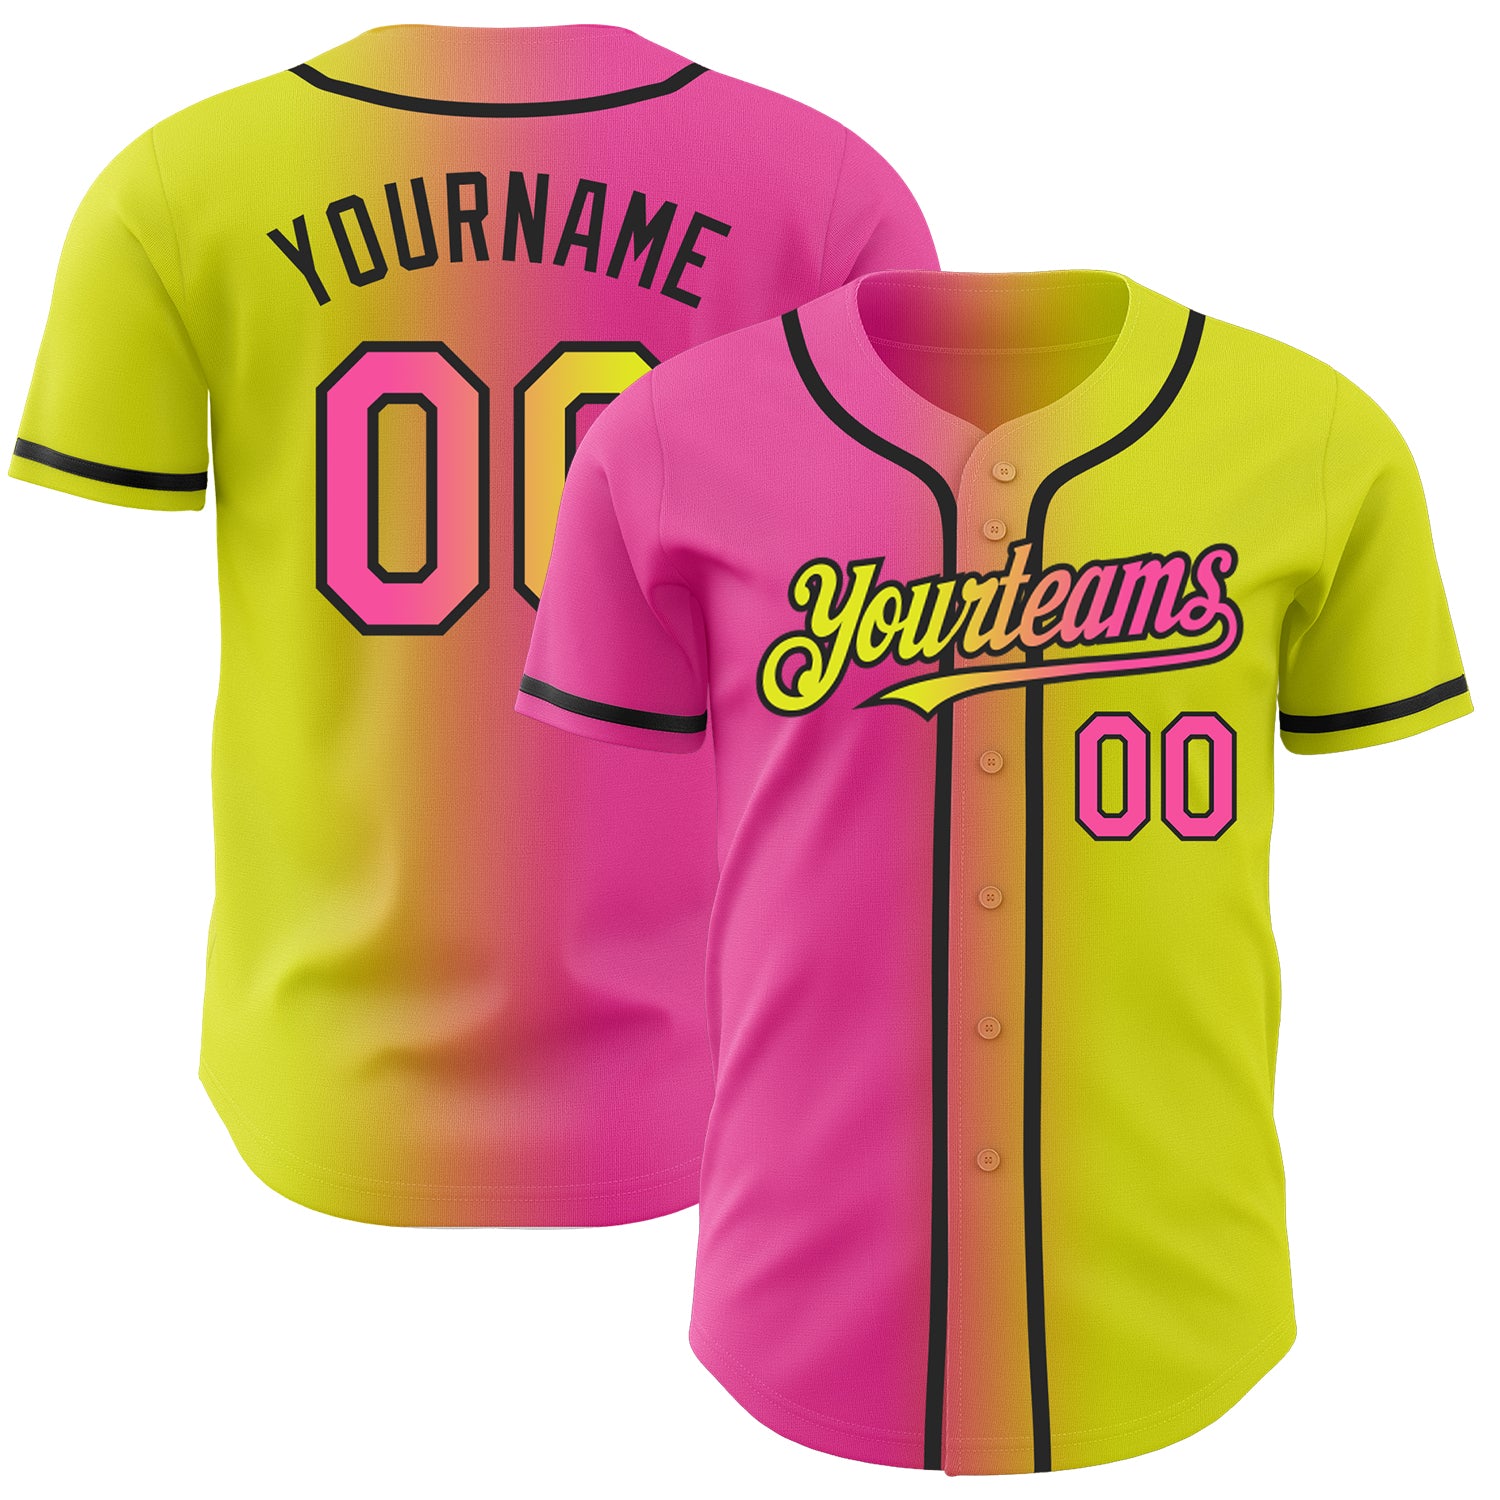 Custom Aqua Pink-Navy Authentic Baseball Jersey